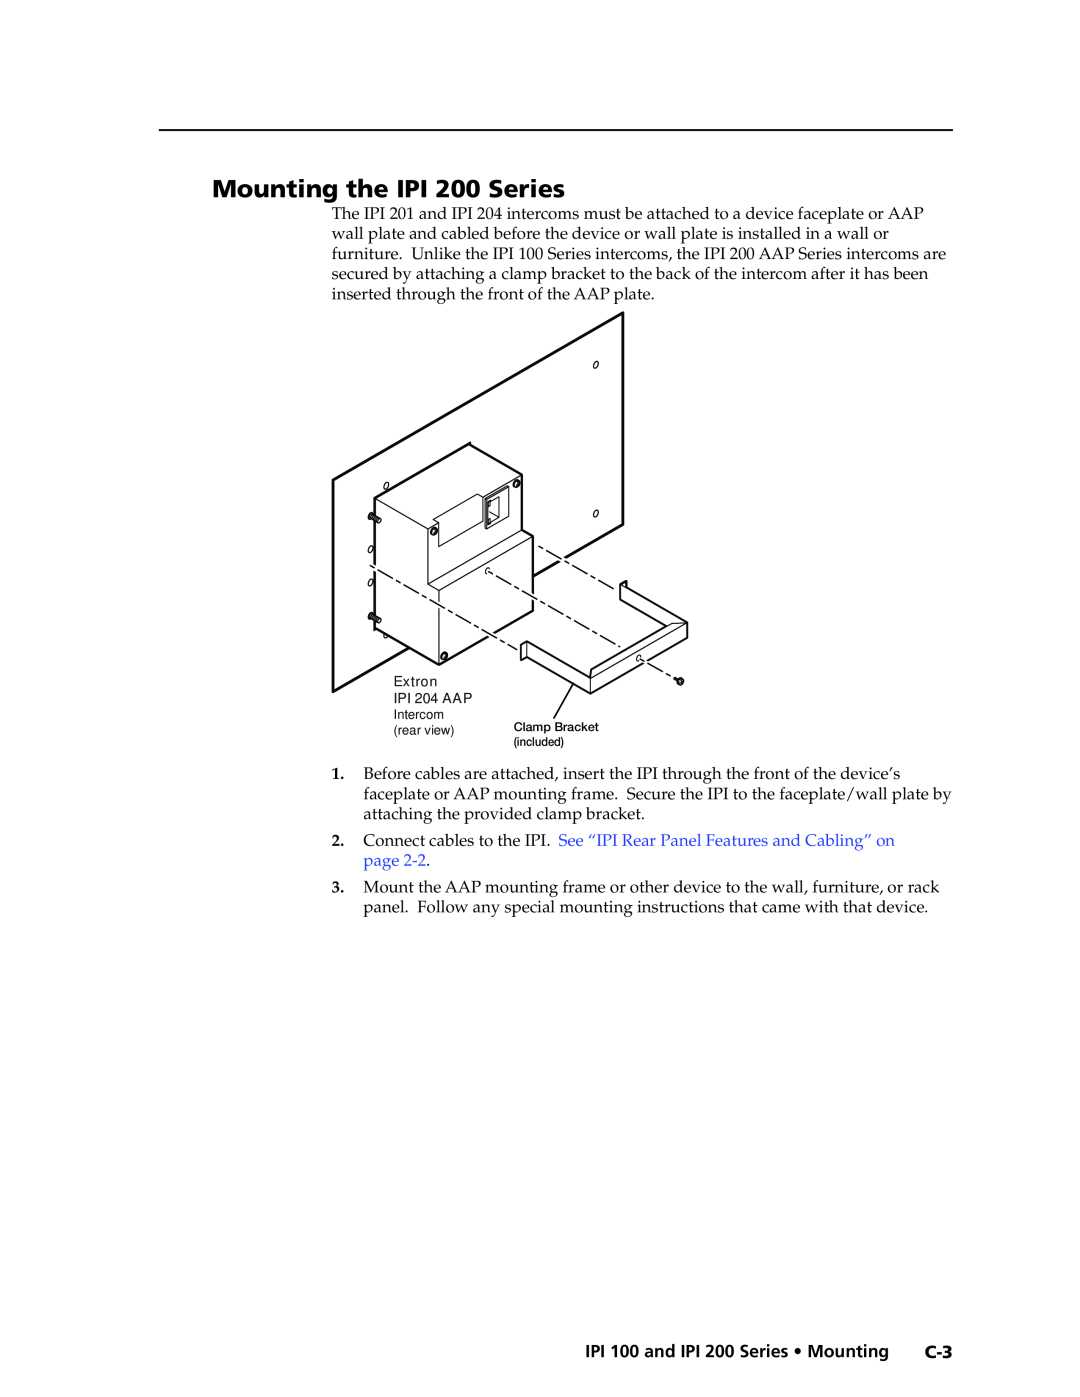 Extron electronic manual Mounting the IPI 200 Series, IPI 100 and IPI 200 Series Mounting 